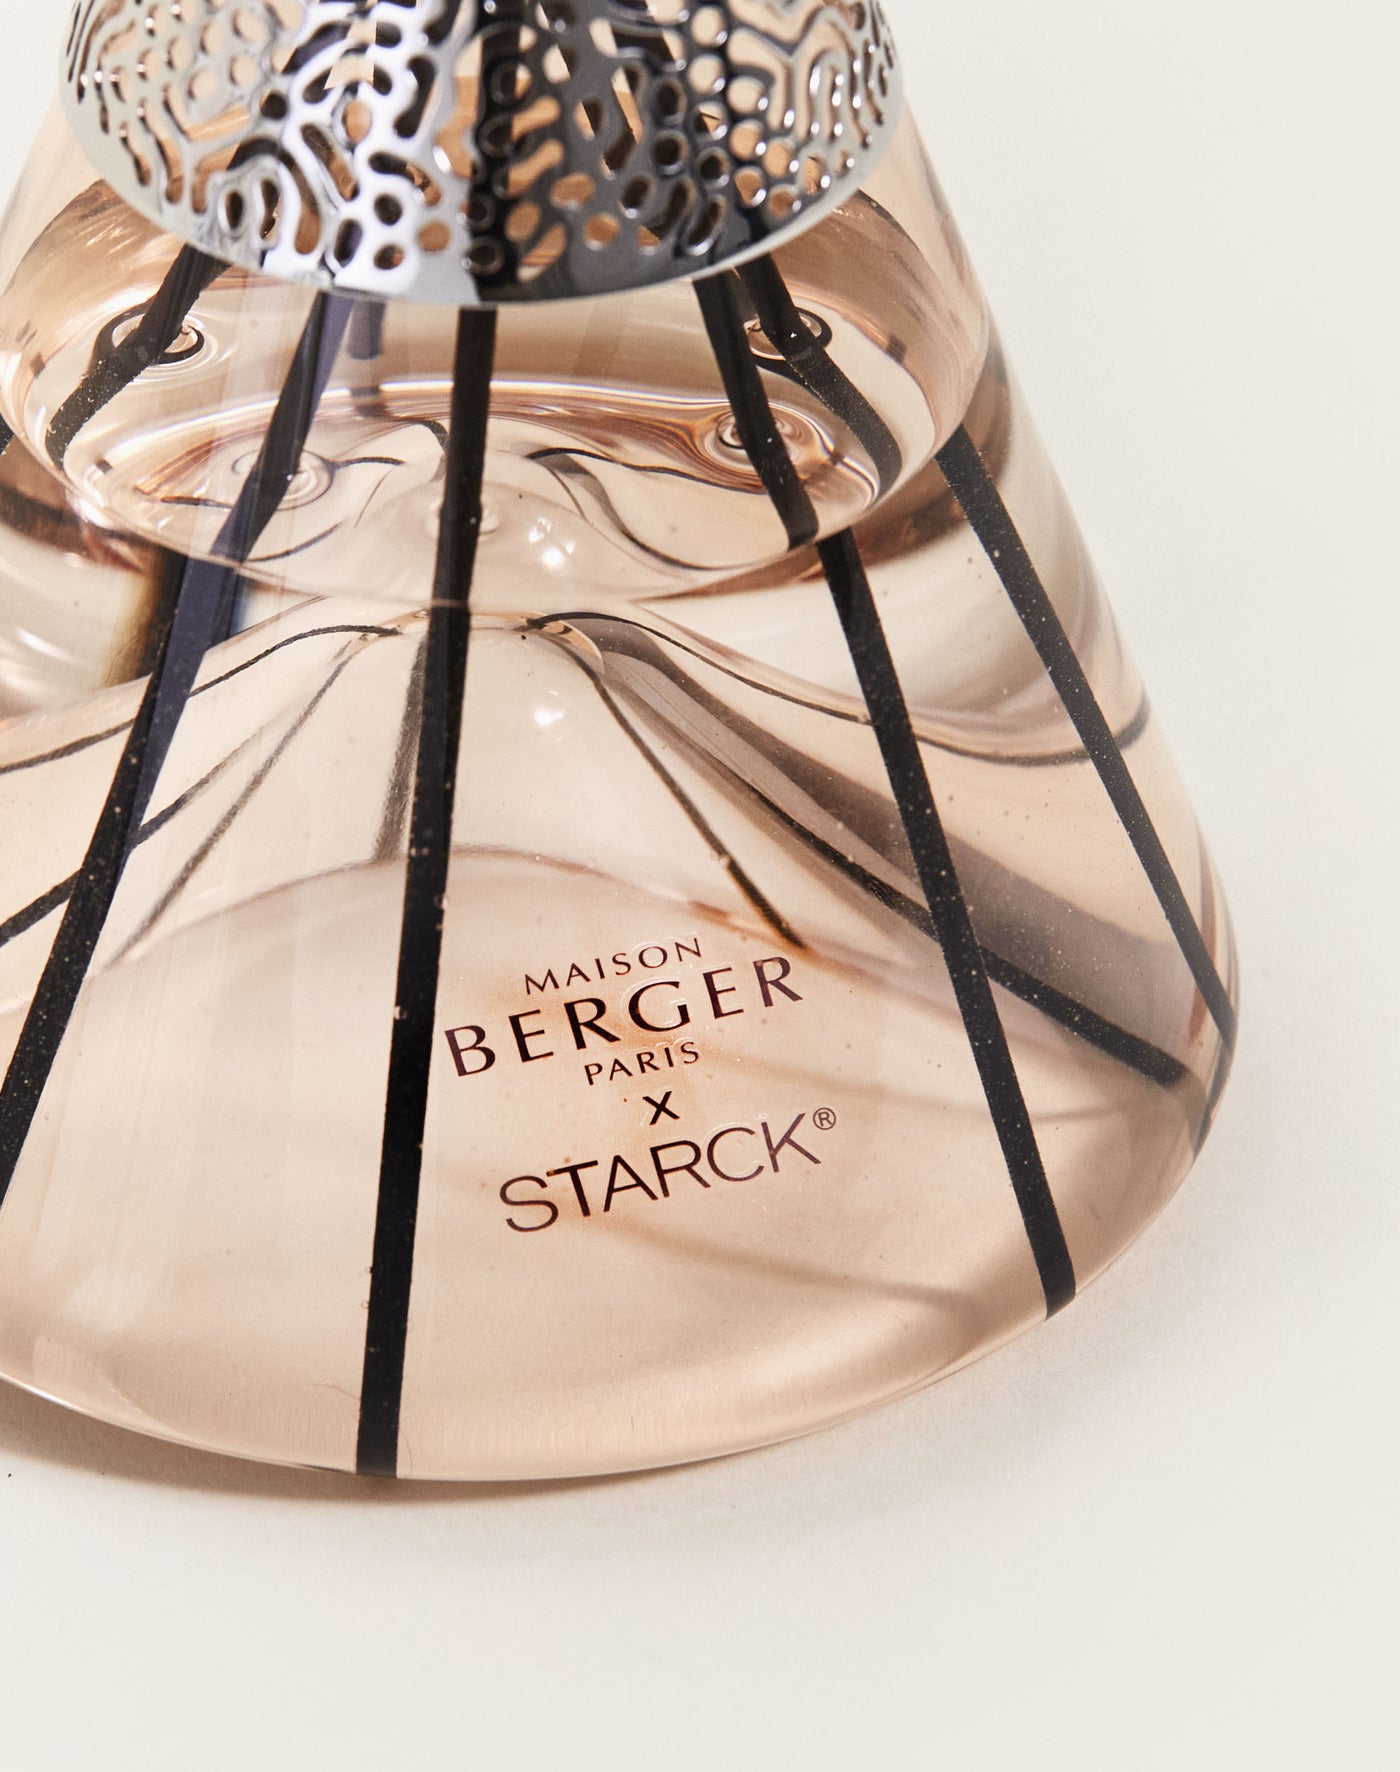 Parfumverspreider by Starck Peau de Soie